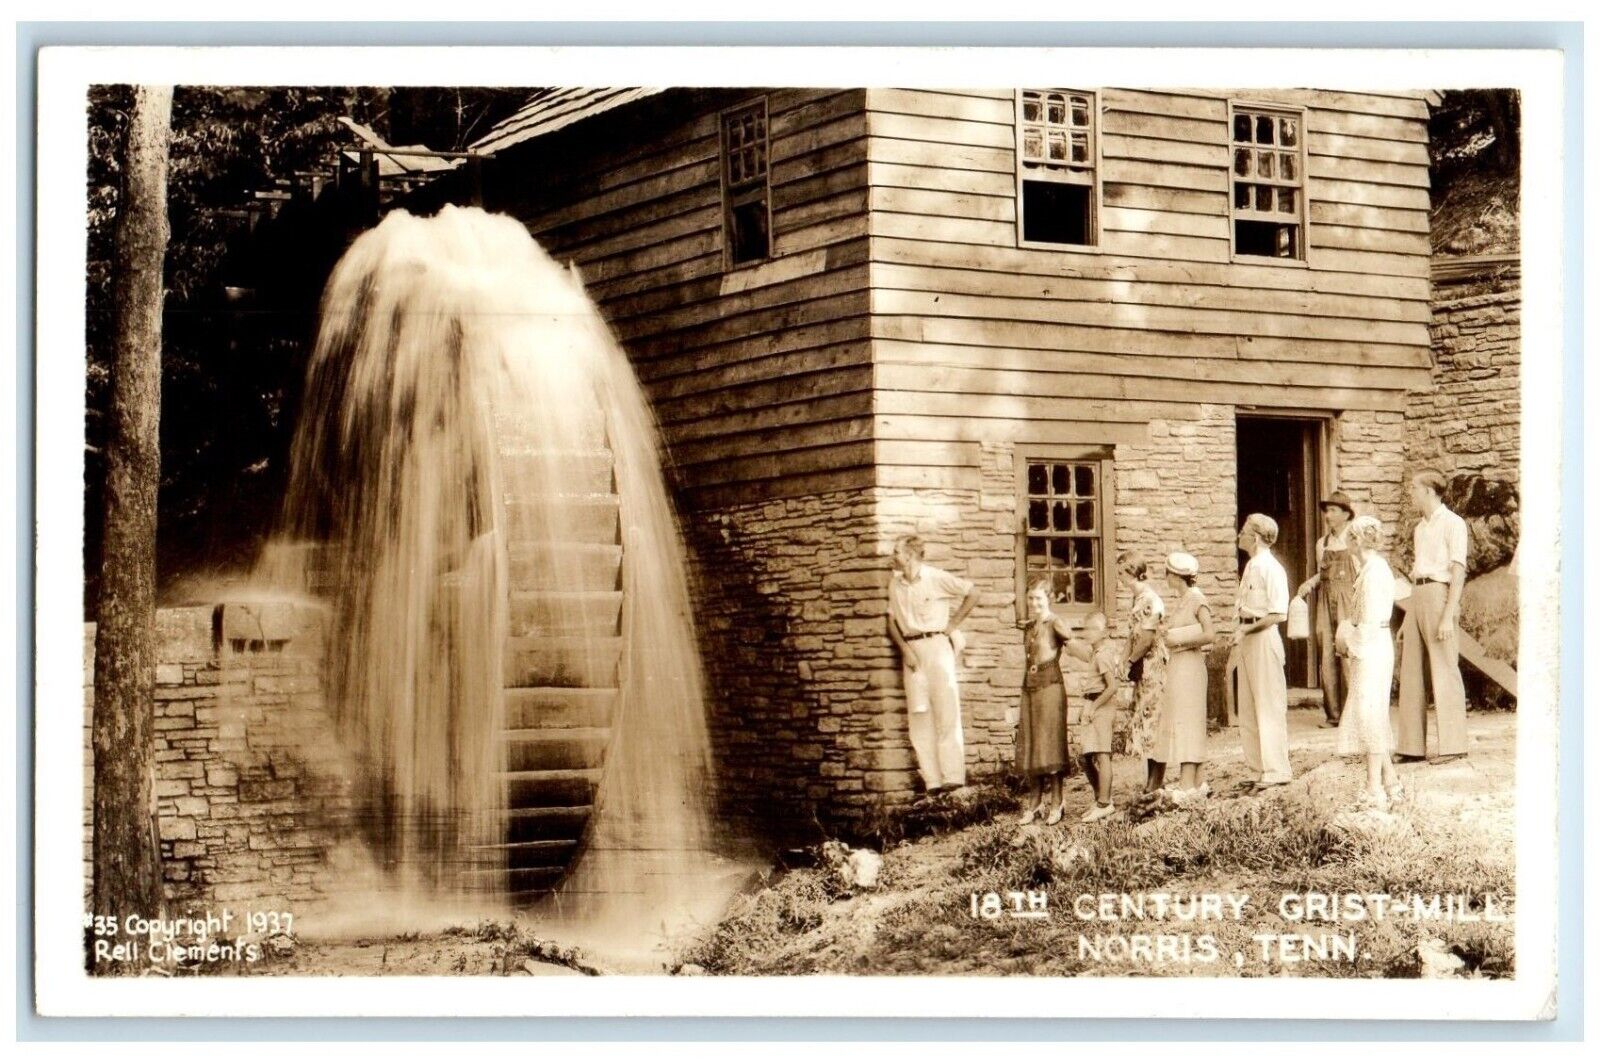 c1940 Century Grist-Mile Exterior Building Norris Tennessee RPPC Photo Postcard